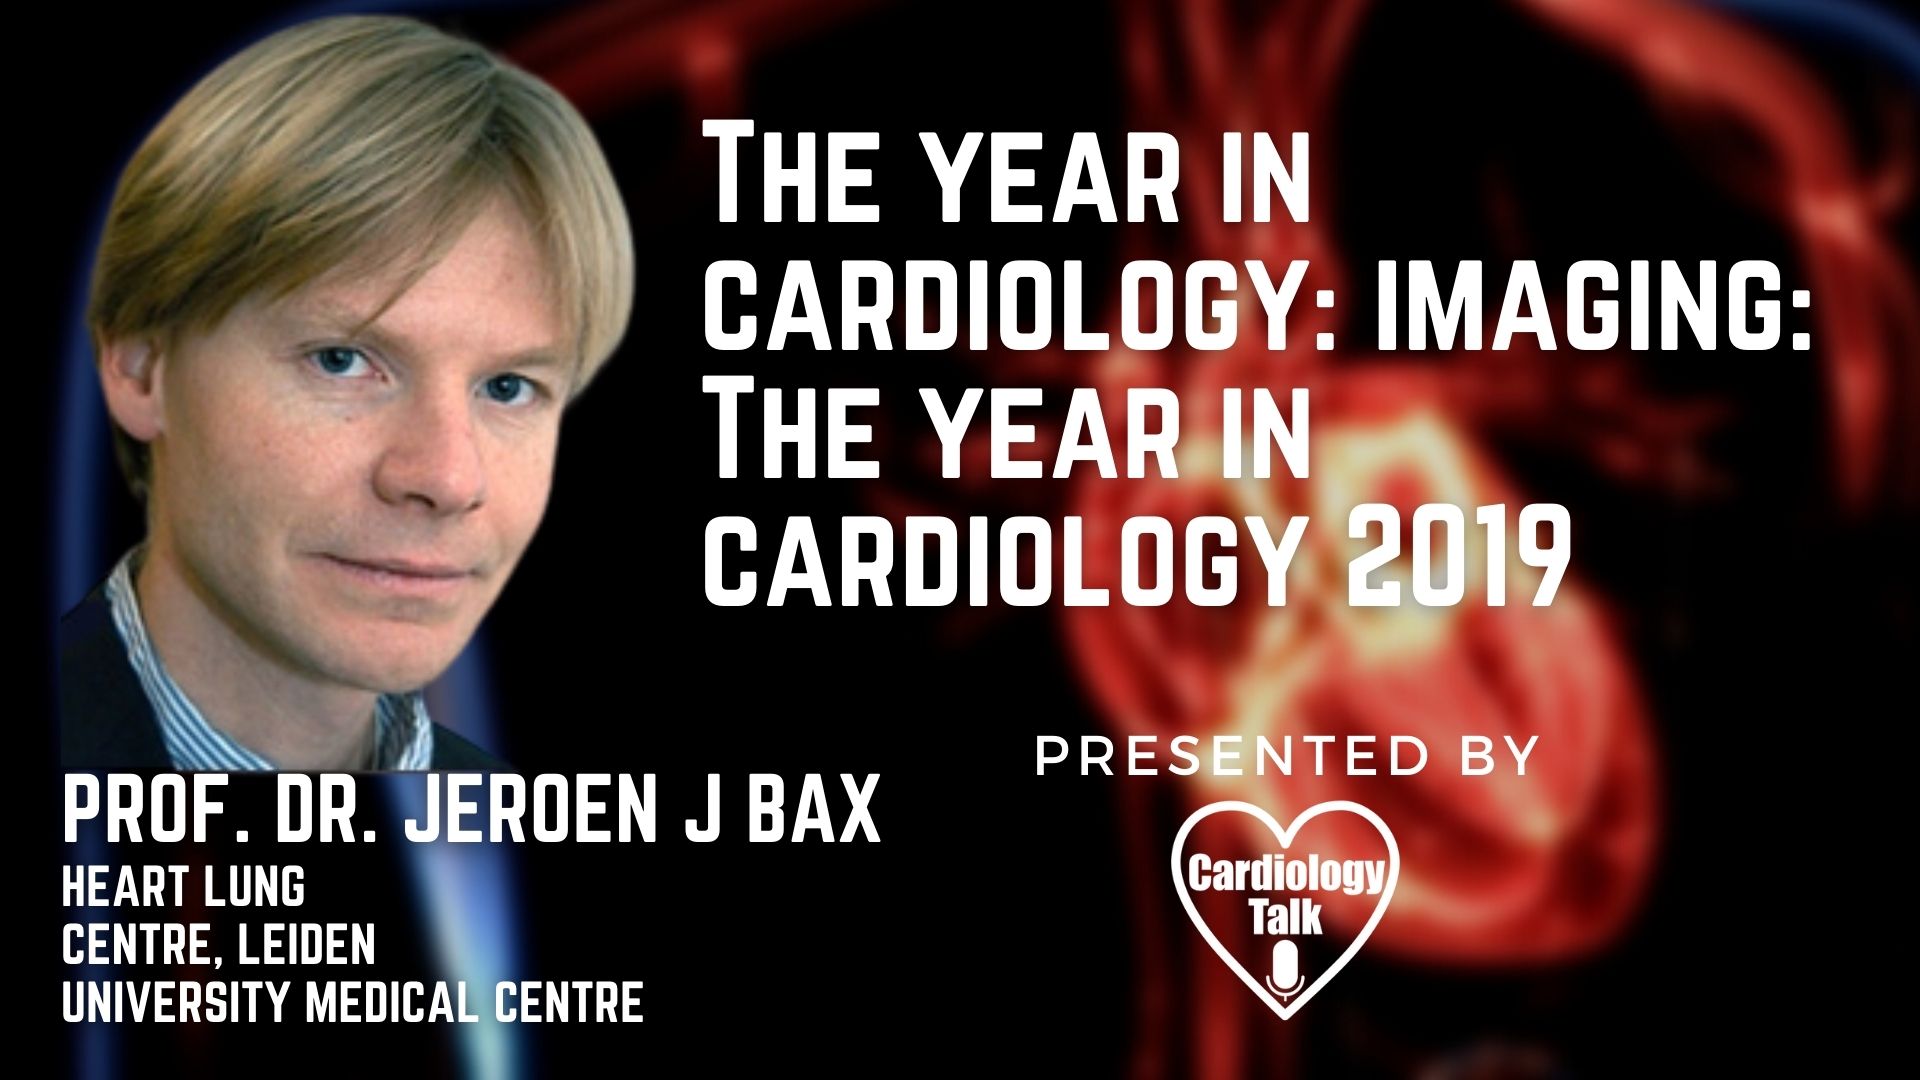 Prof. Dr. Jeroen J Bax #CardiologyImaging #Cardiology #Research The Year In Cardiology: Imaging: The Year In Cardiology 2020